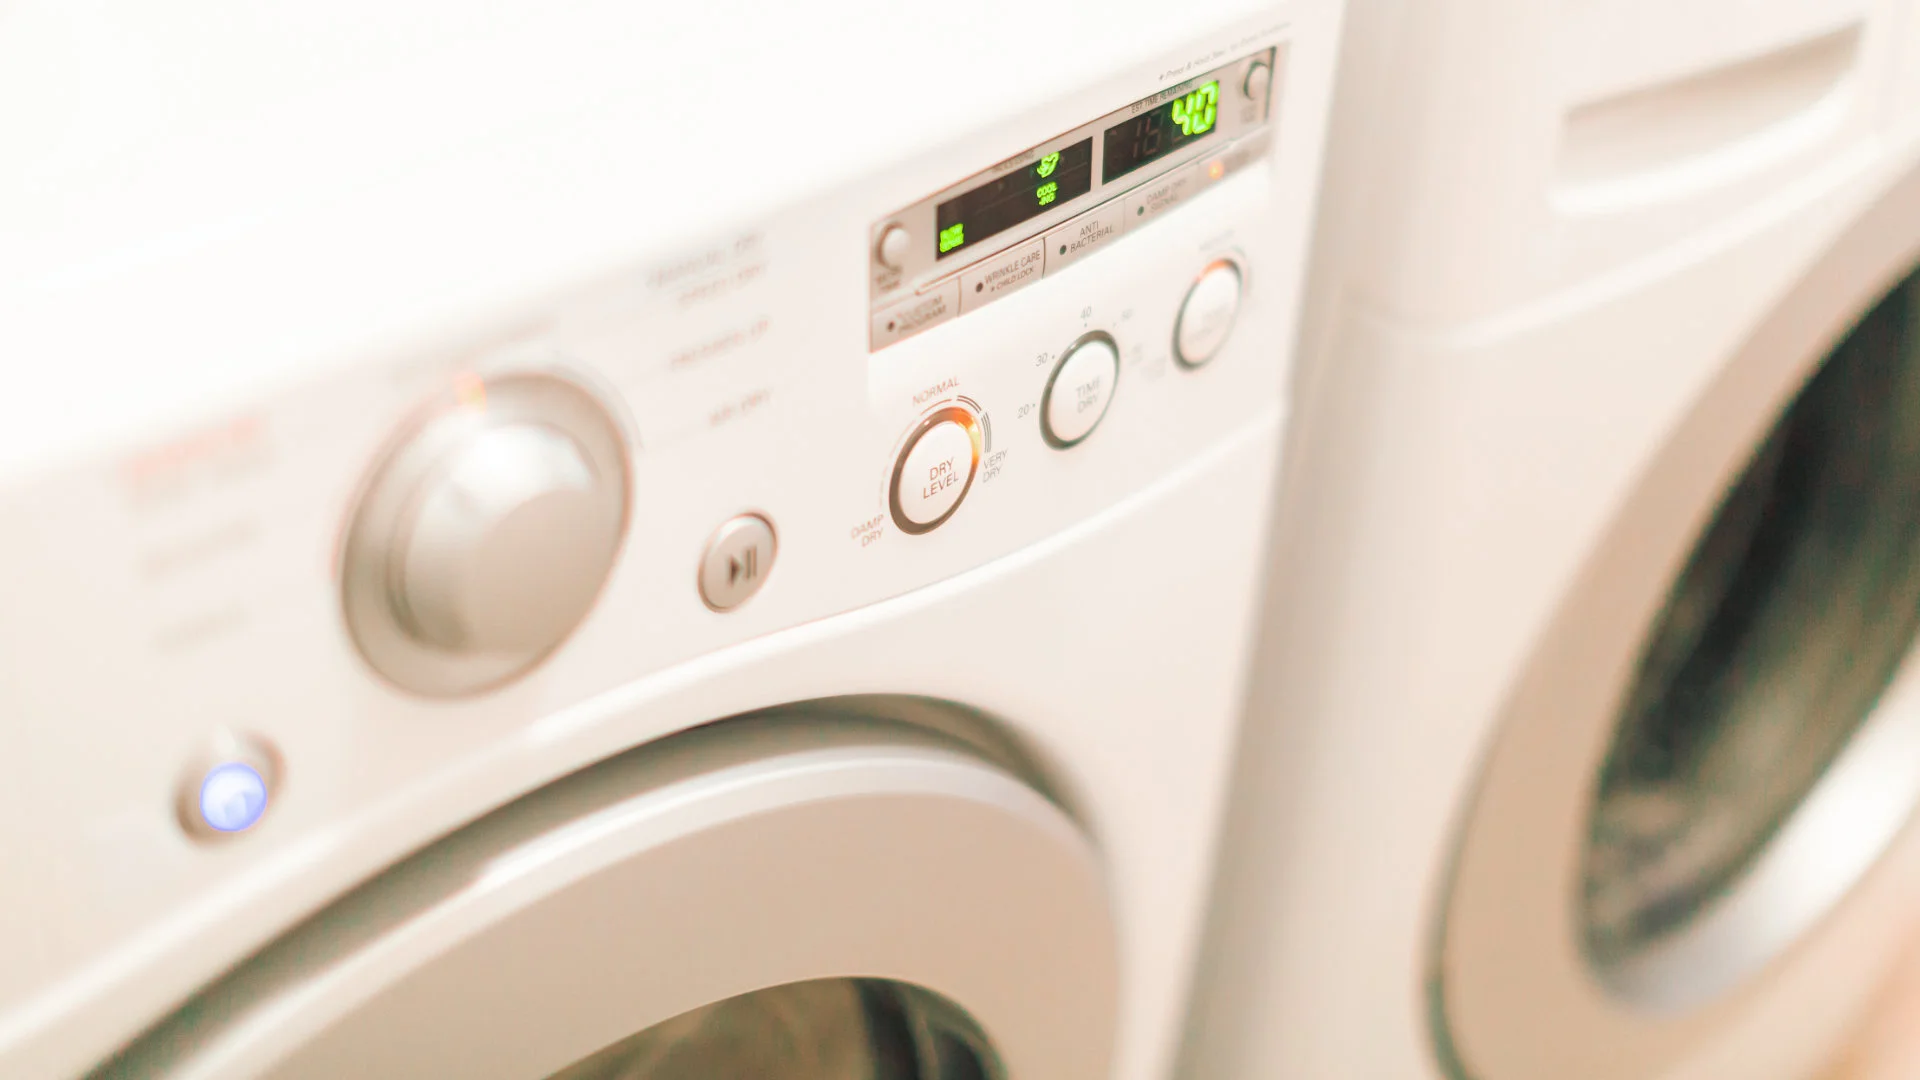 Understanding LG Dryer Error Codes D90, D95, D80, and D75